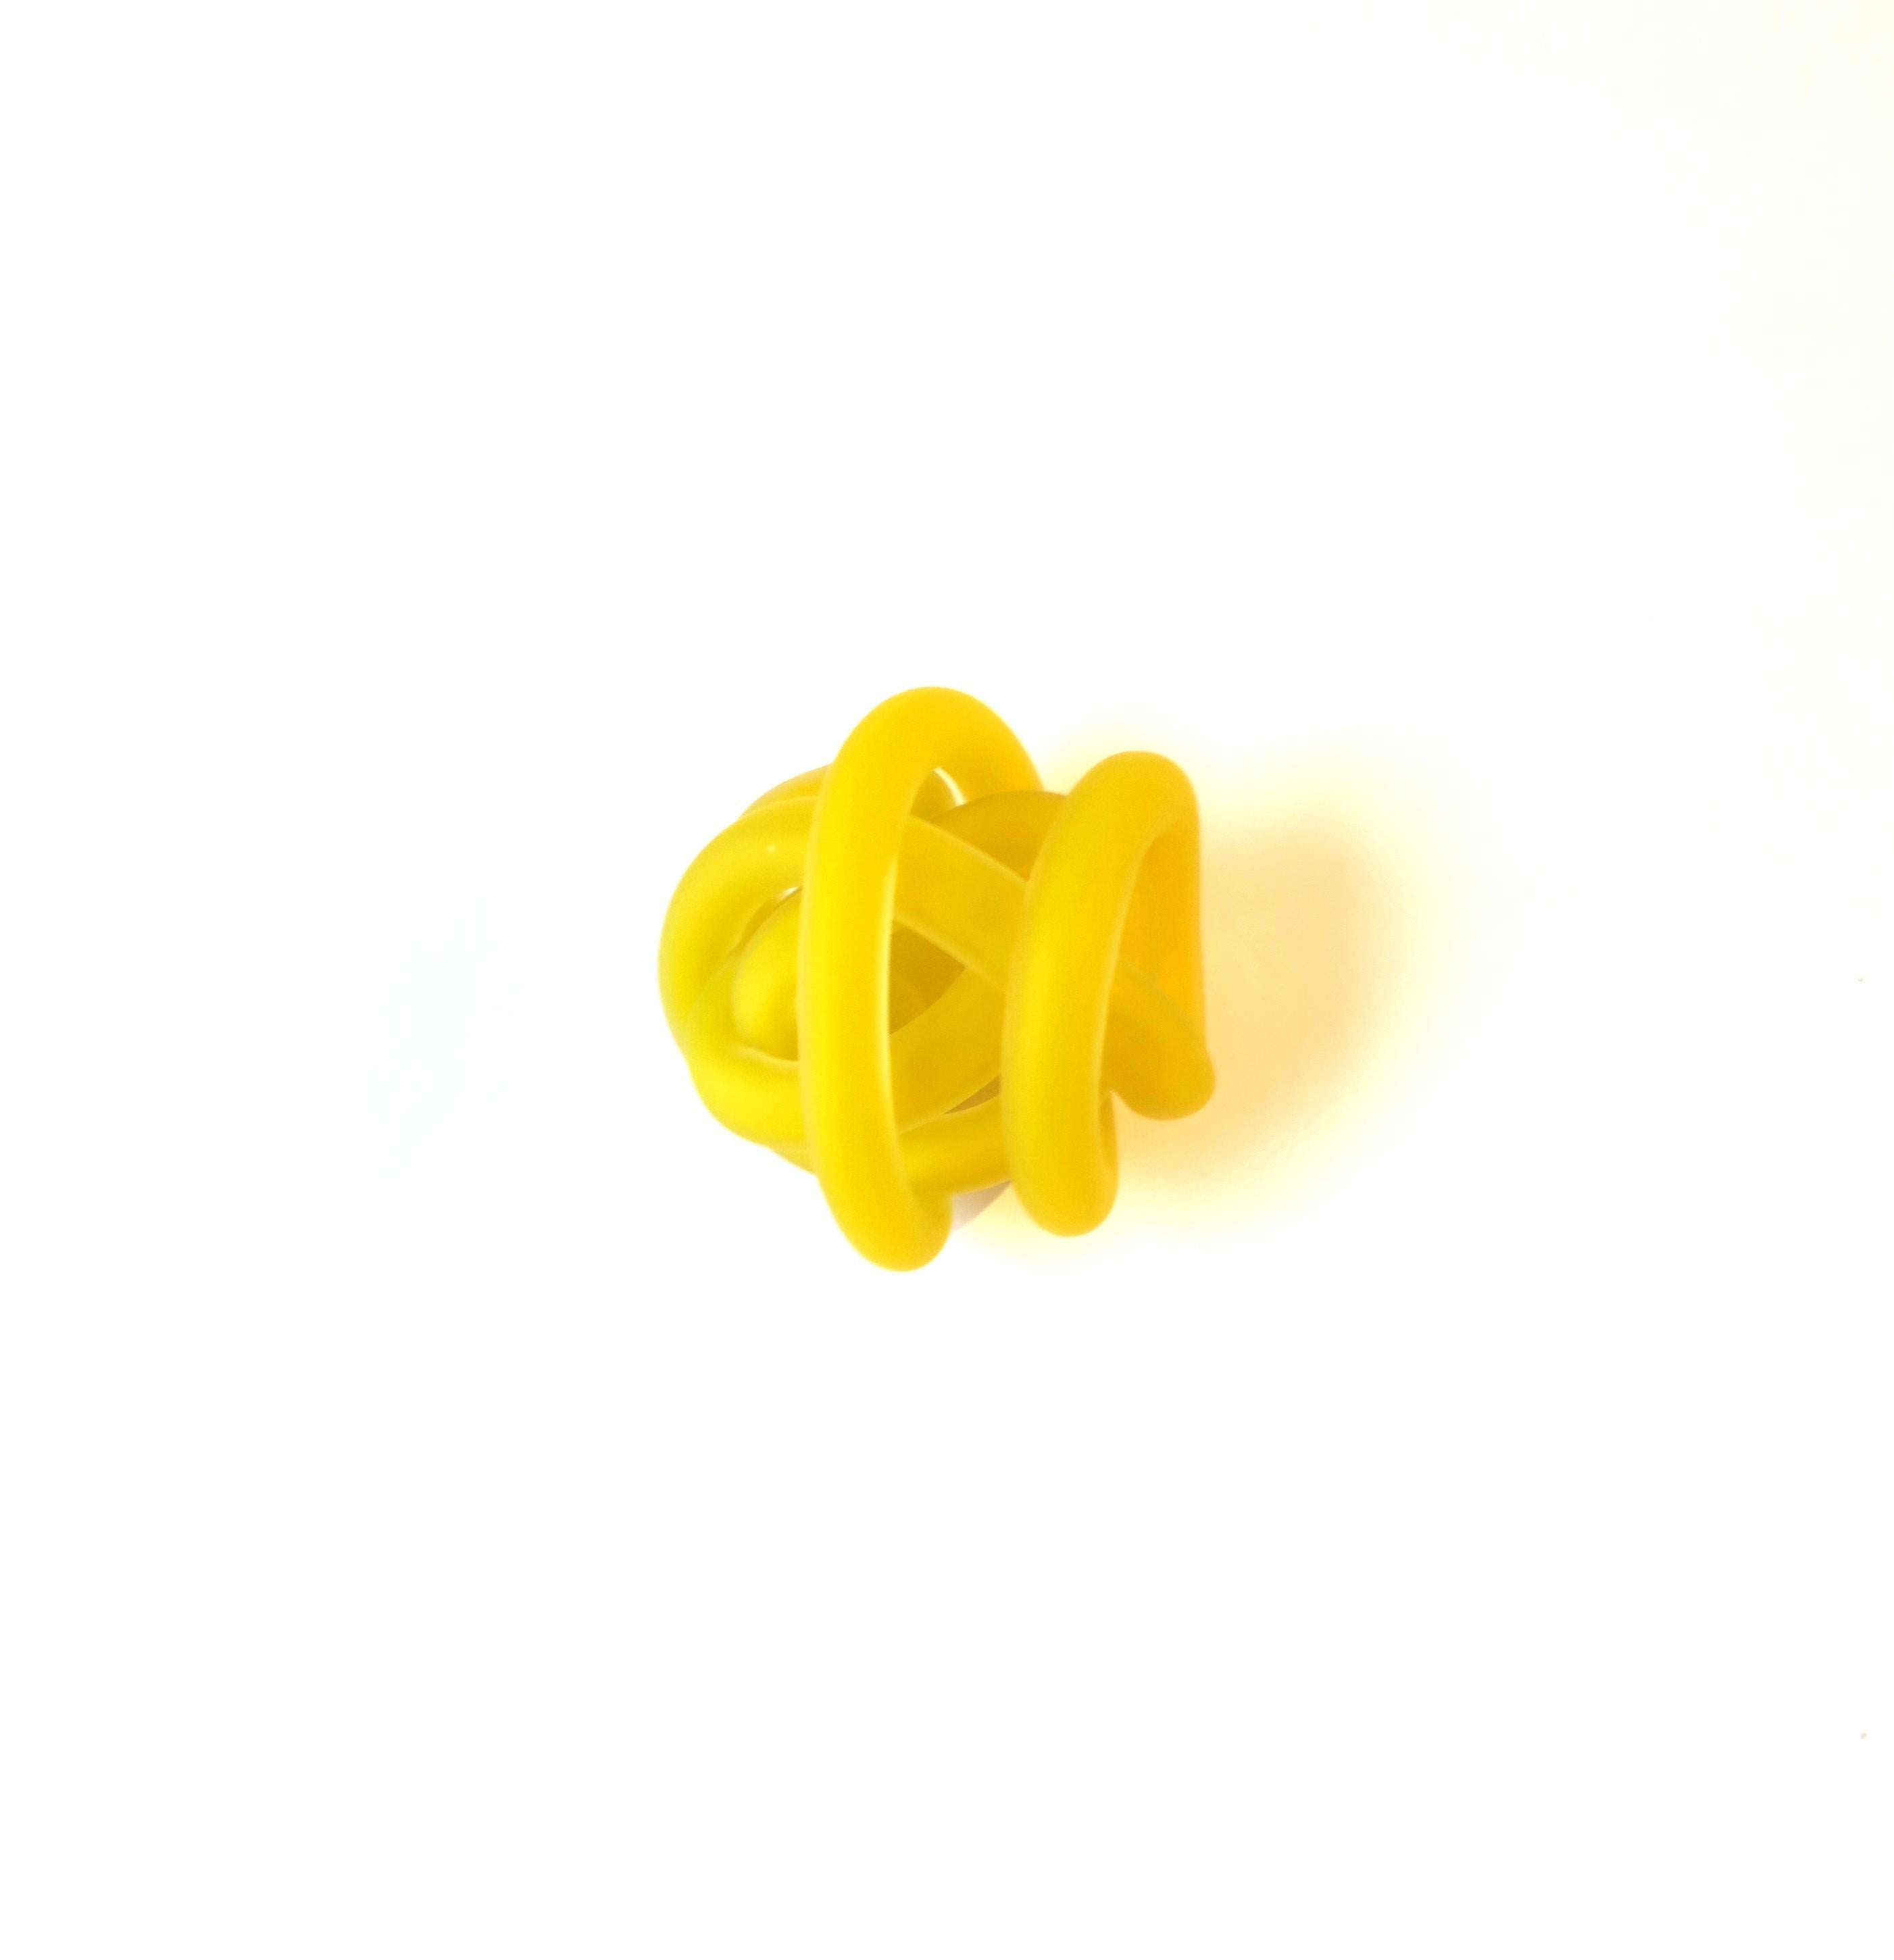 Yellow Art Glass Knot Sculpture Decorative Object 3